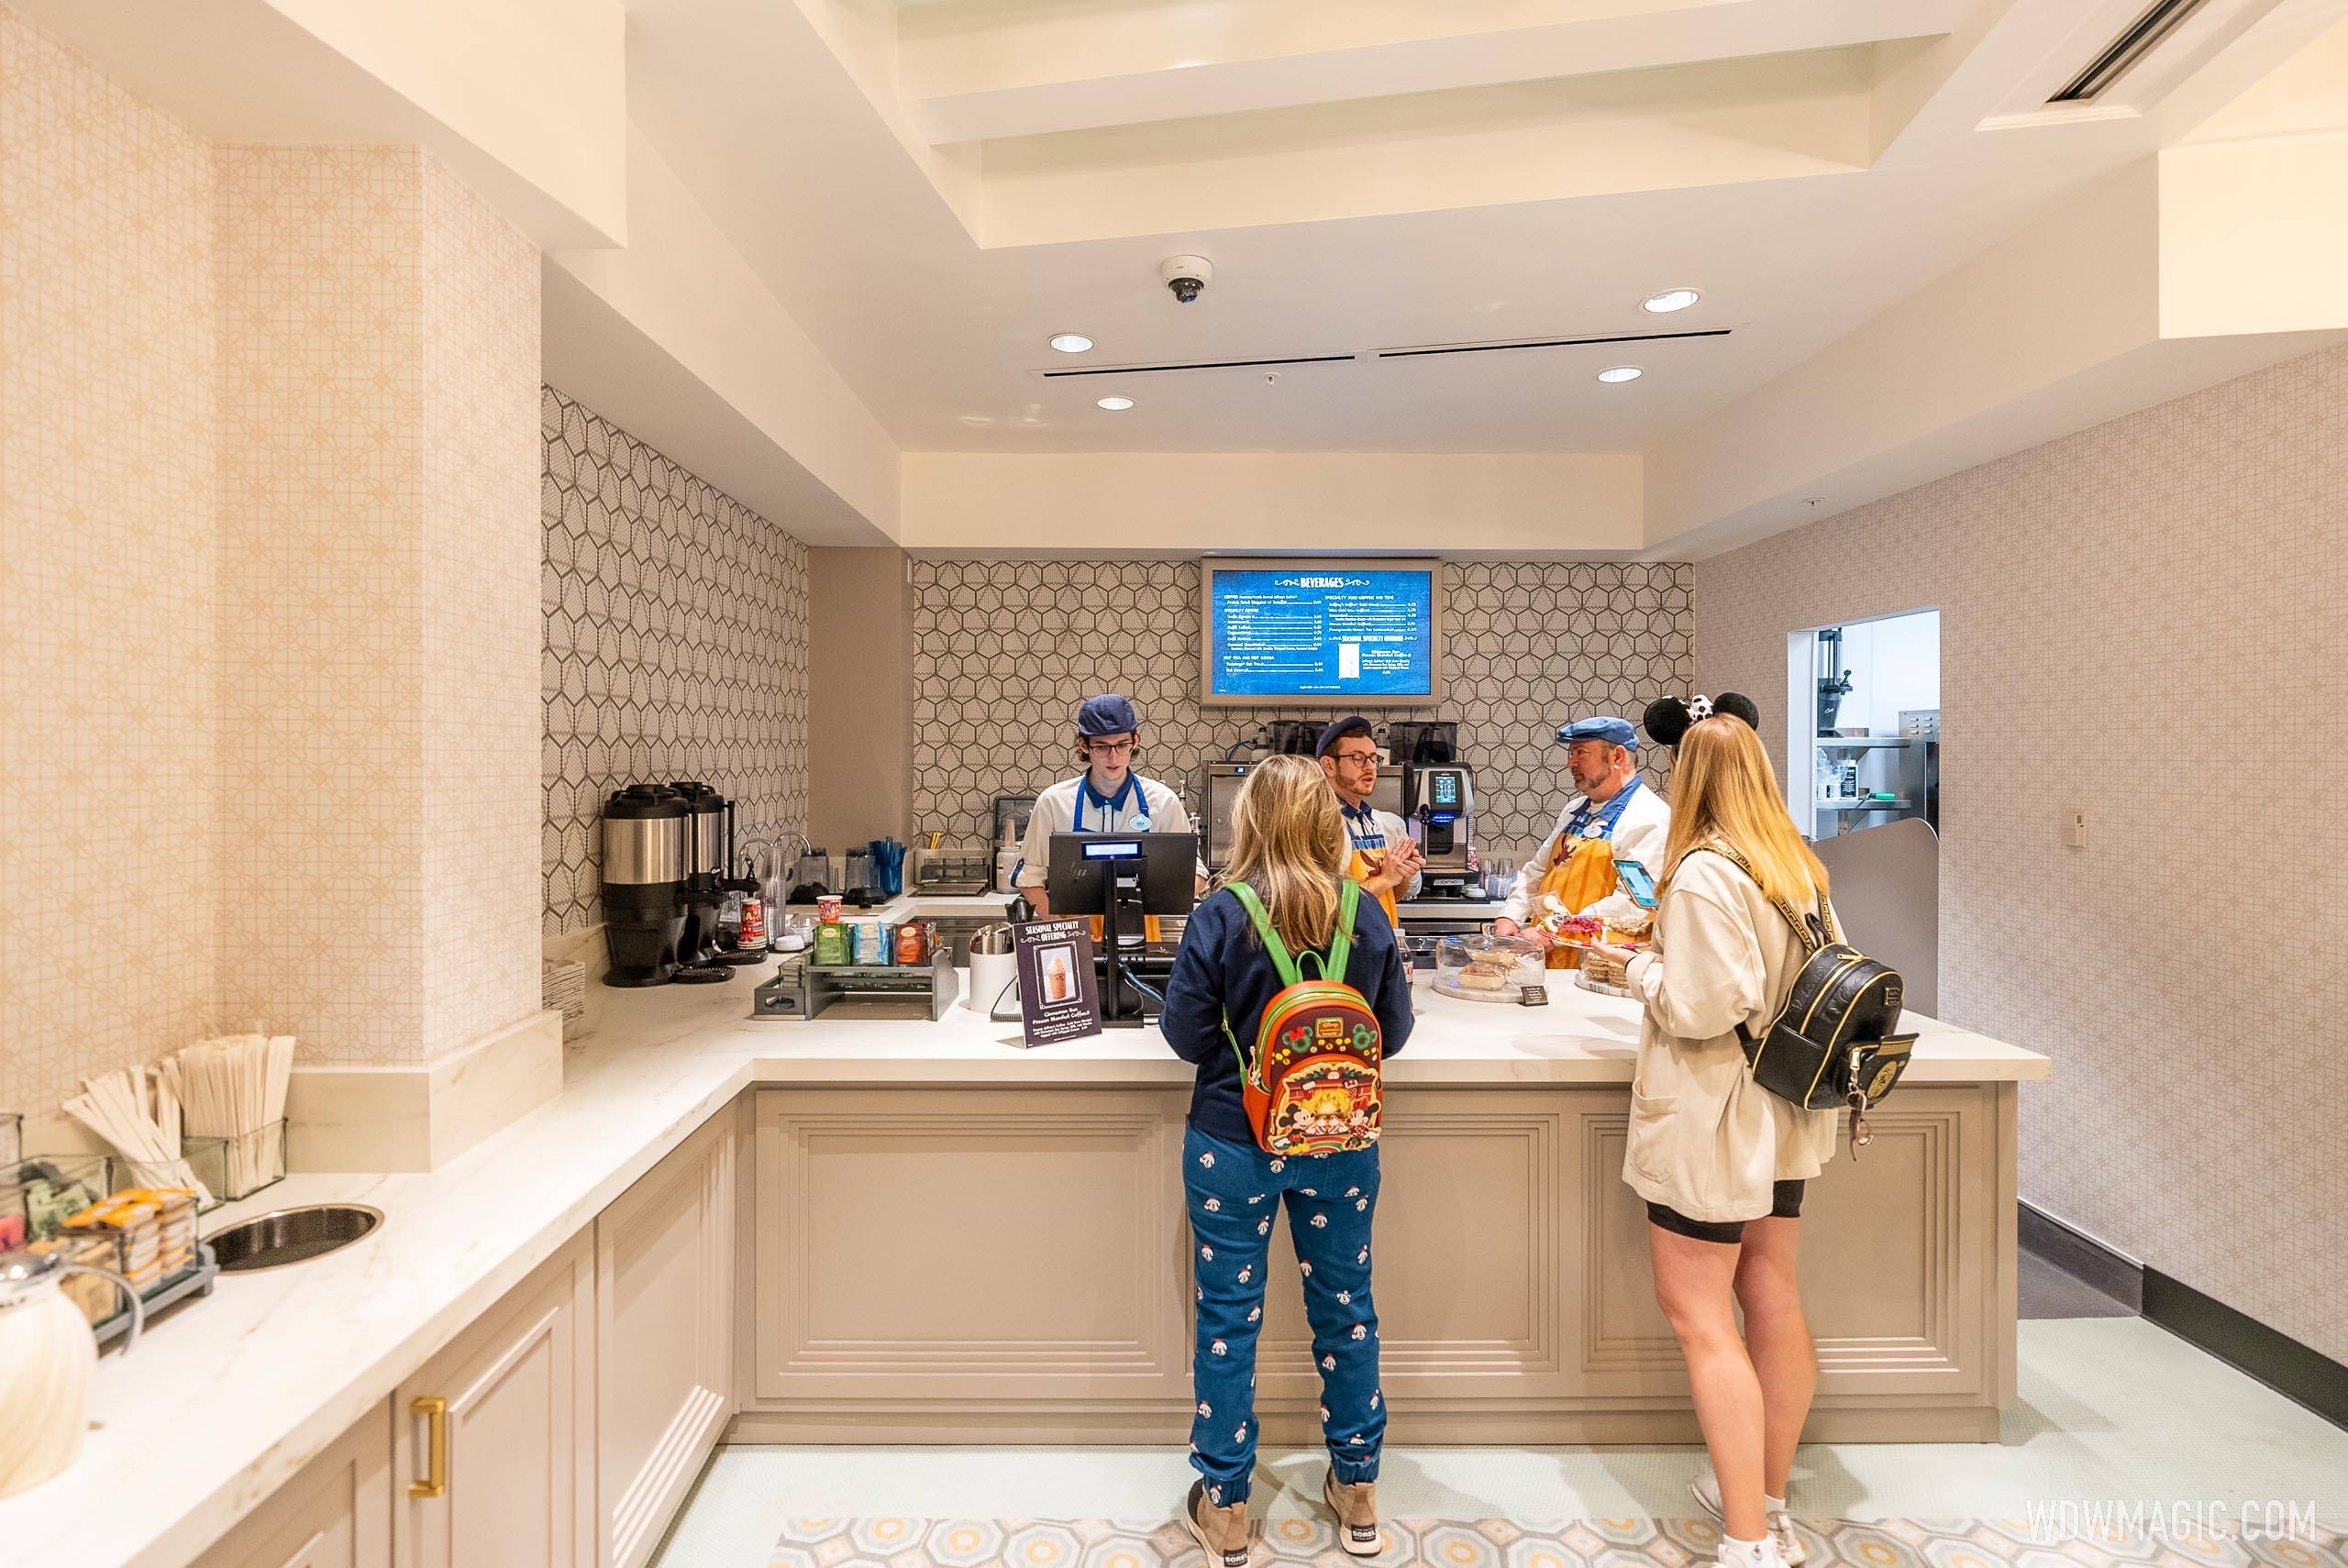 Carousel Coffee at Disney's BoardWalk Inn closing for short refurbishment